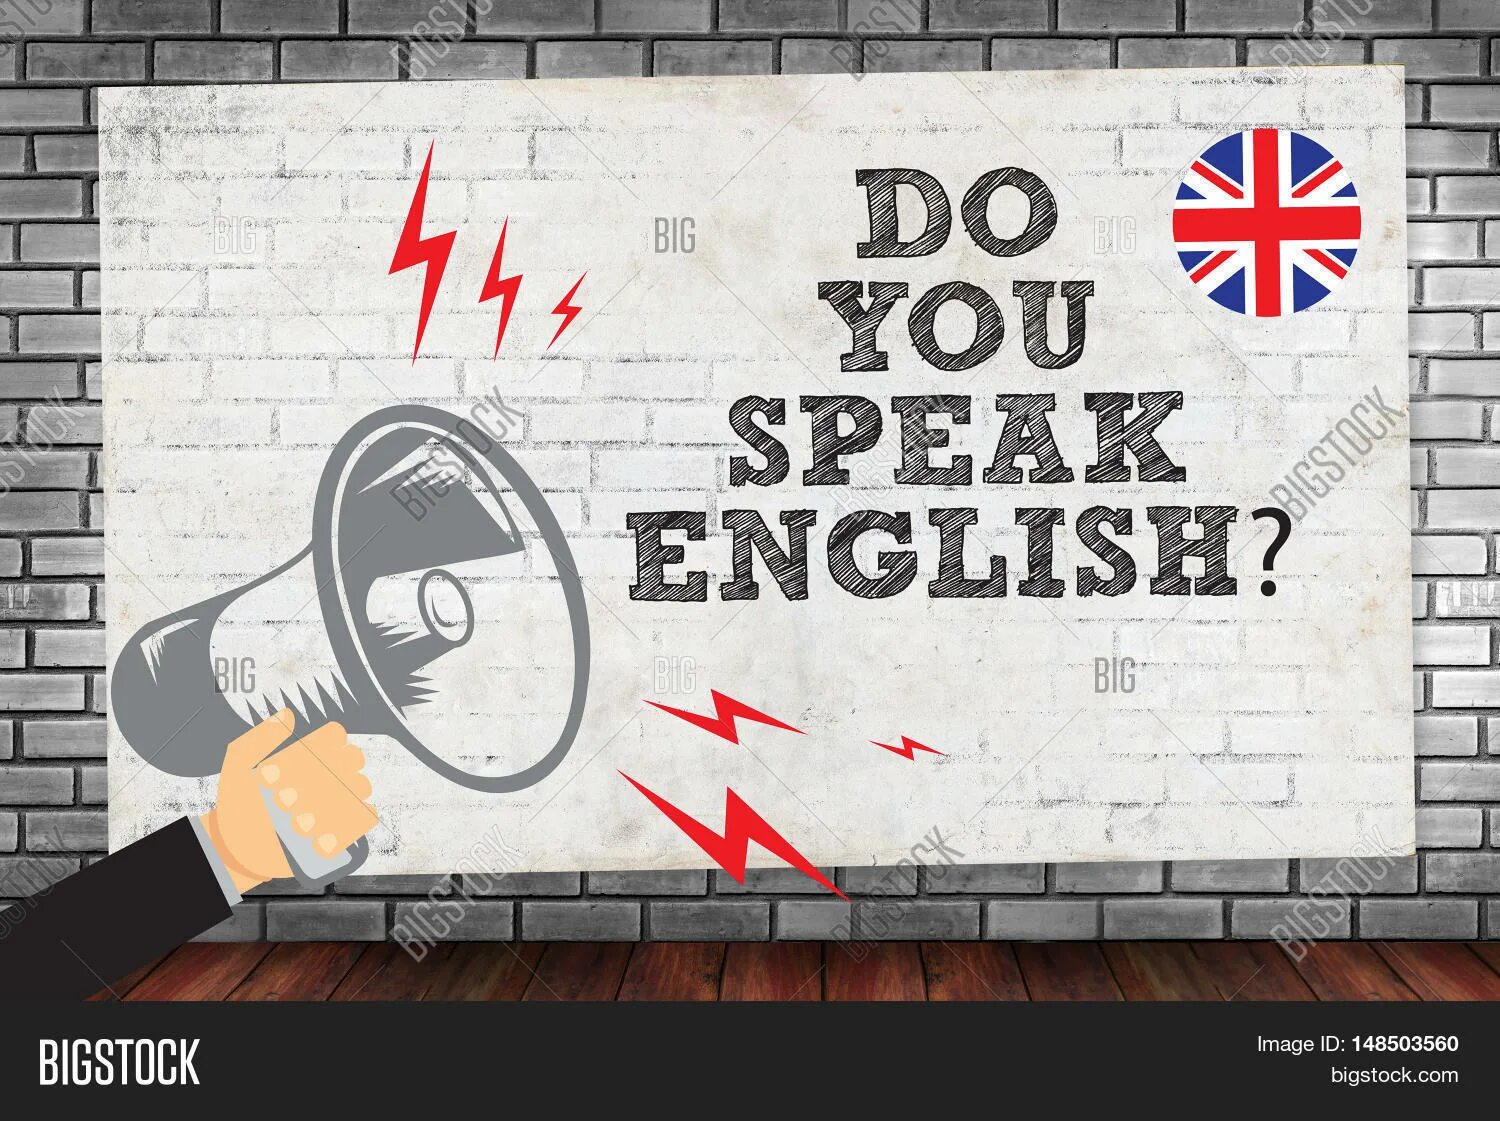 Do you speak English. Do you speak English картинки. Школьная доска do you speak English. Do you speak english yes